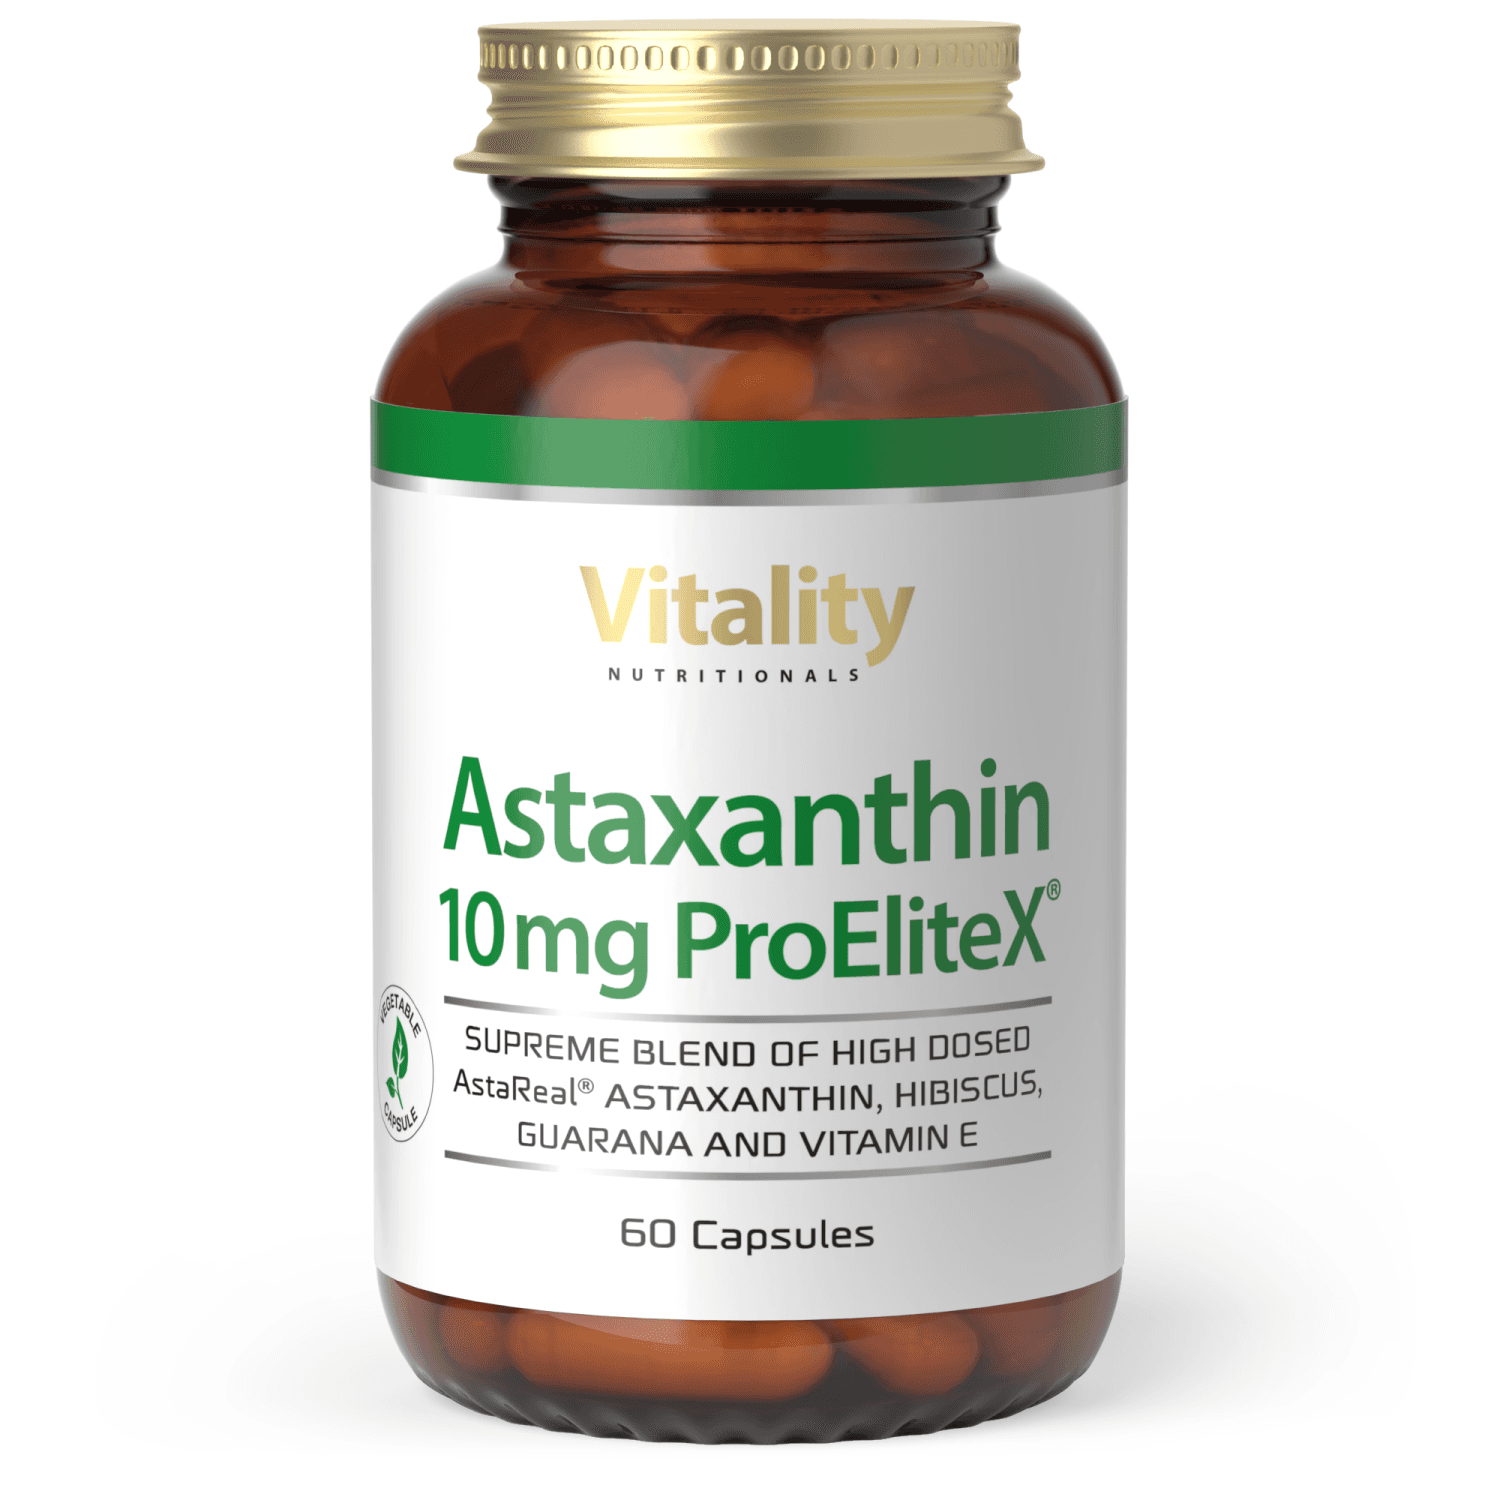 Astaxanthin 10mg ProEliteX - 60 Capsules - quantity-1